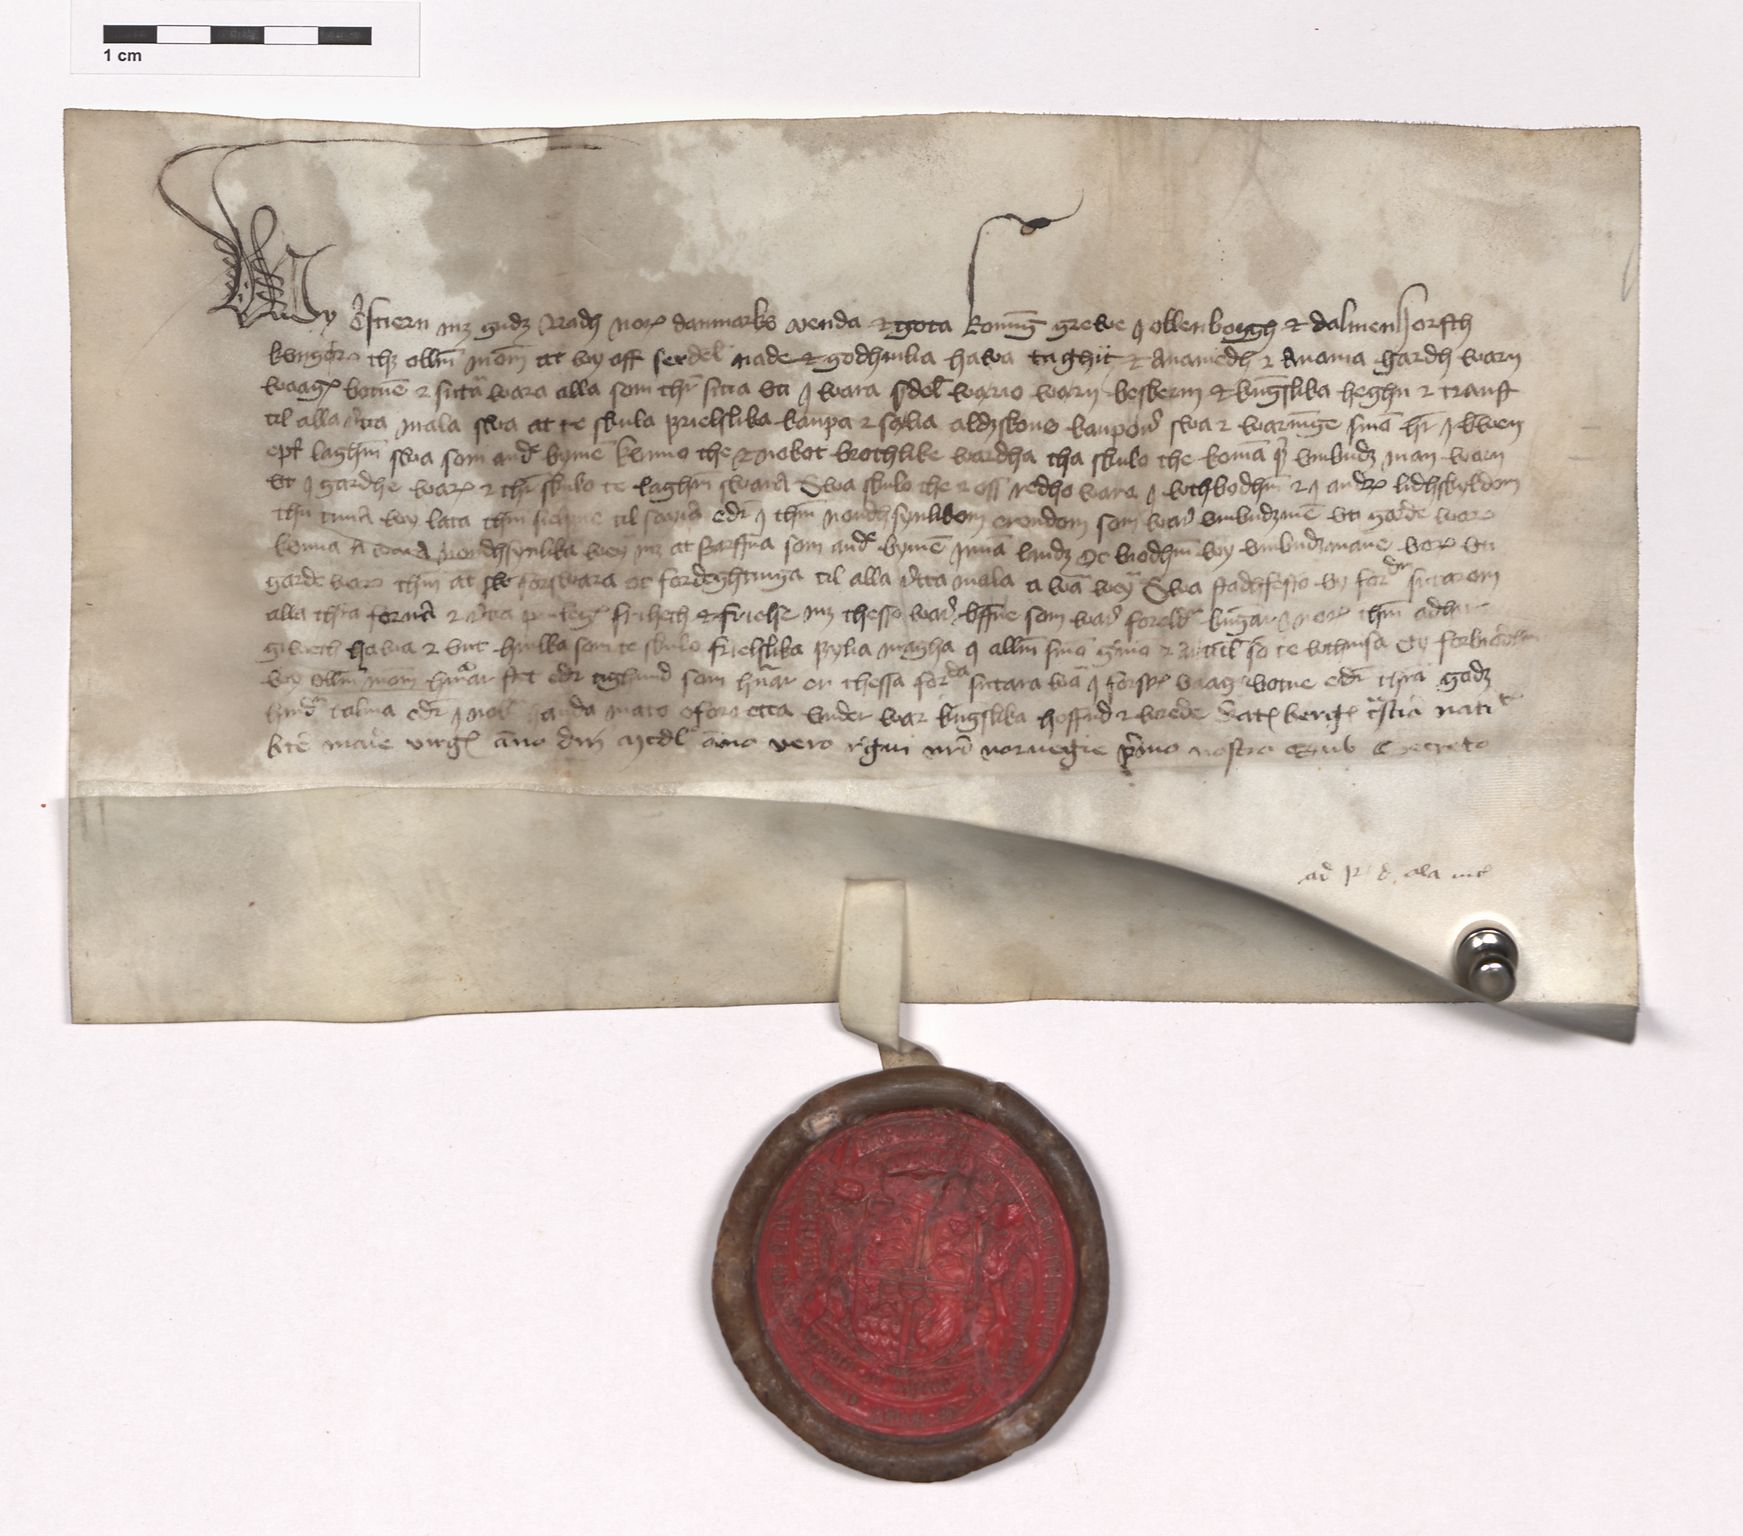 07.1 Urkunden, 3 Auswärtige Beziehungen (Externa), AHL/-/21: Norwegen (Norvagica); Kontor zu Bergen, 1247-1747, s. 653